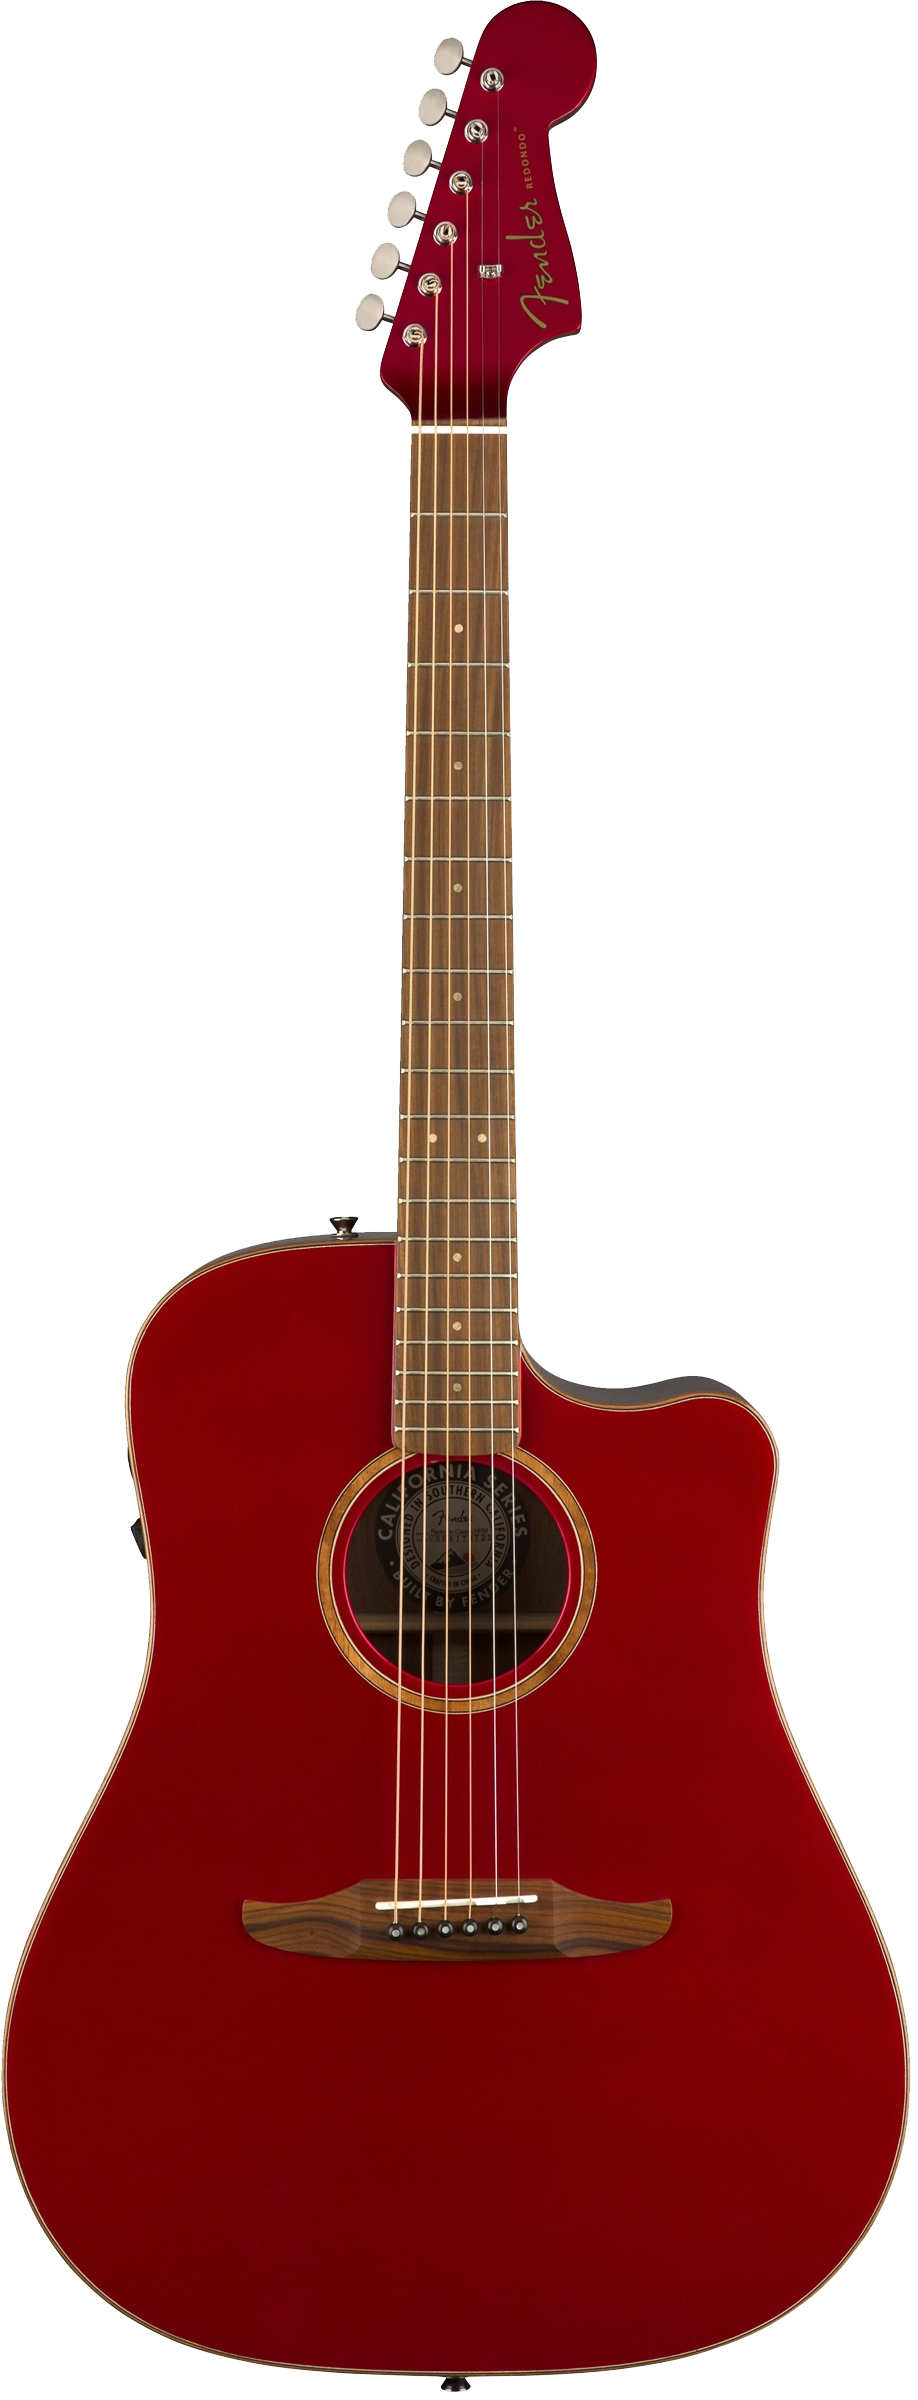 Fender Redondo Classic Acoustic / Electric Guitar - Hot Rod Red Metallic